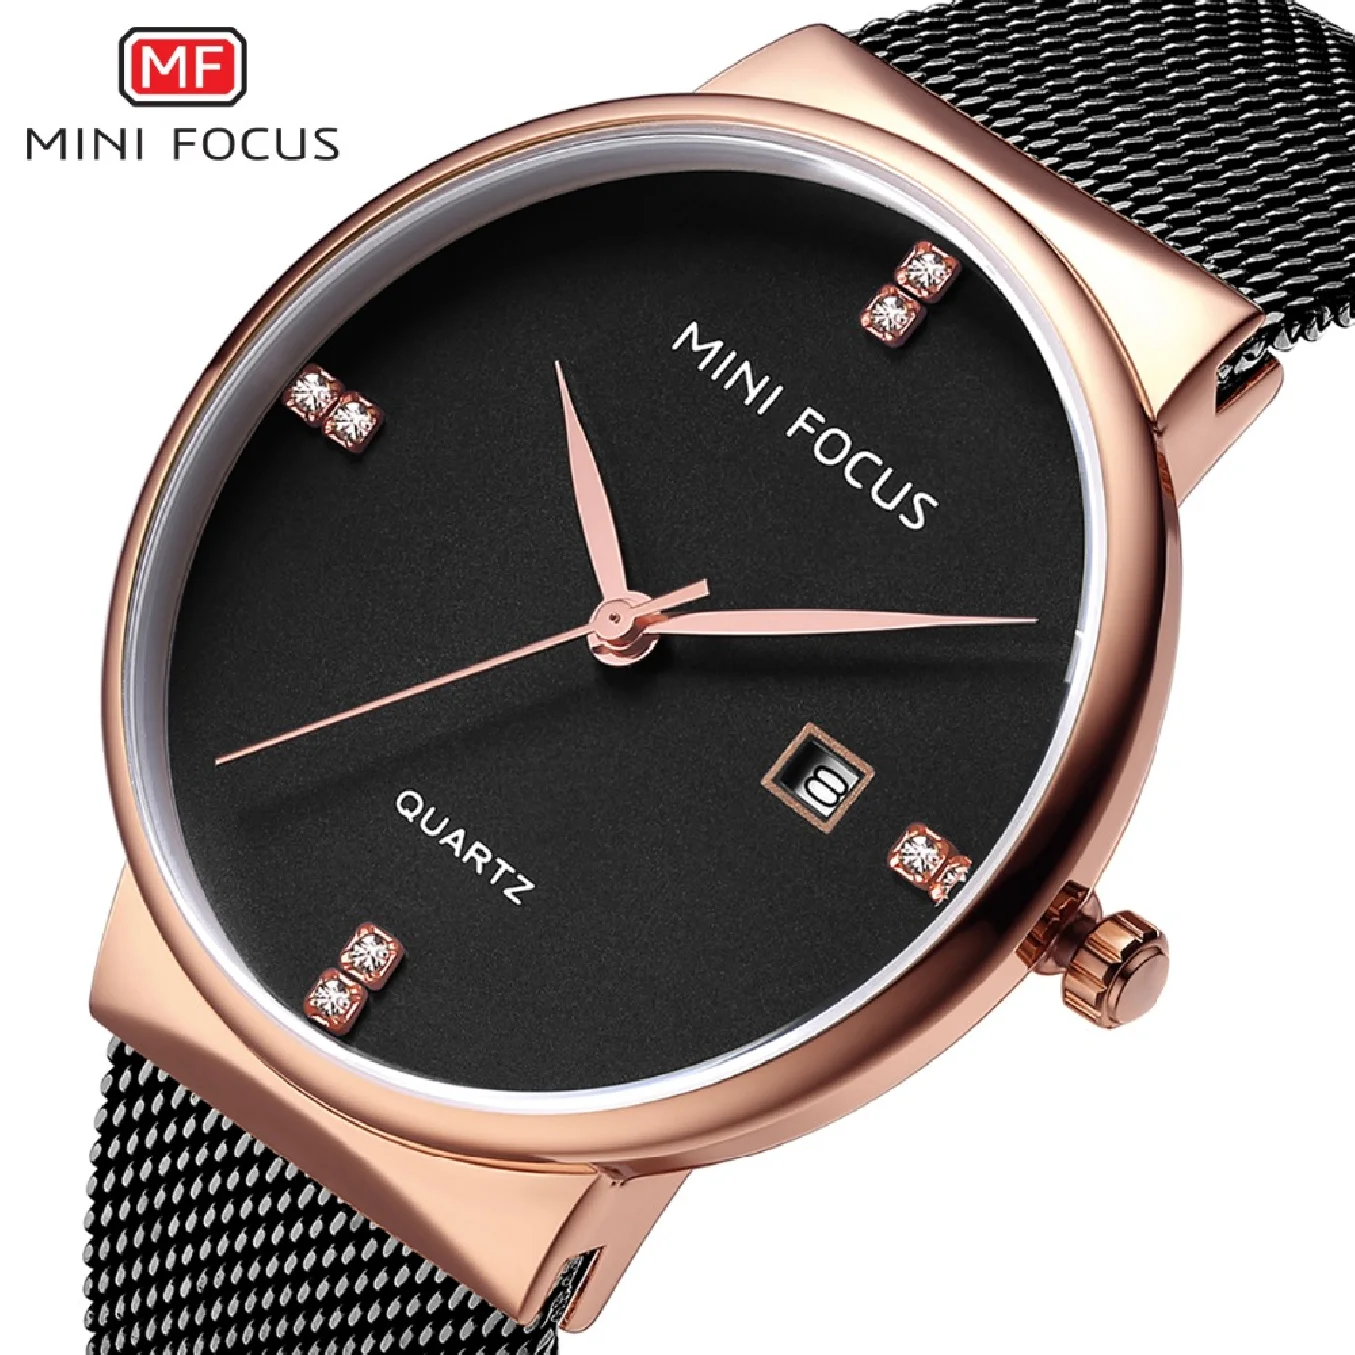 

MINI FOCUS Top Brand Men's Watch Stainless Steel Bands Waterproof Business Watche Men Calendar Display Watches Clocks Gift